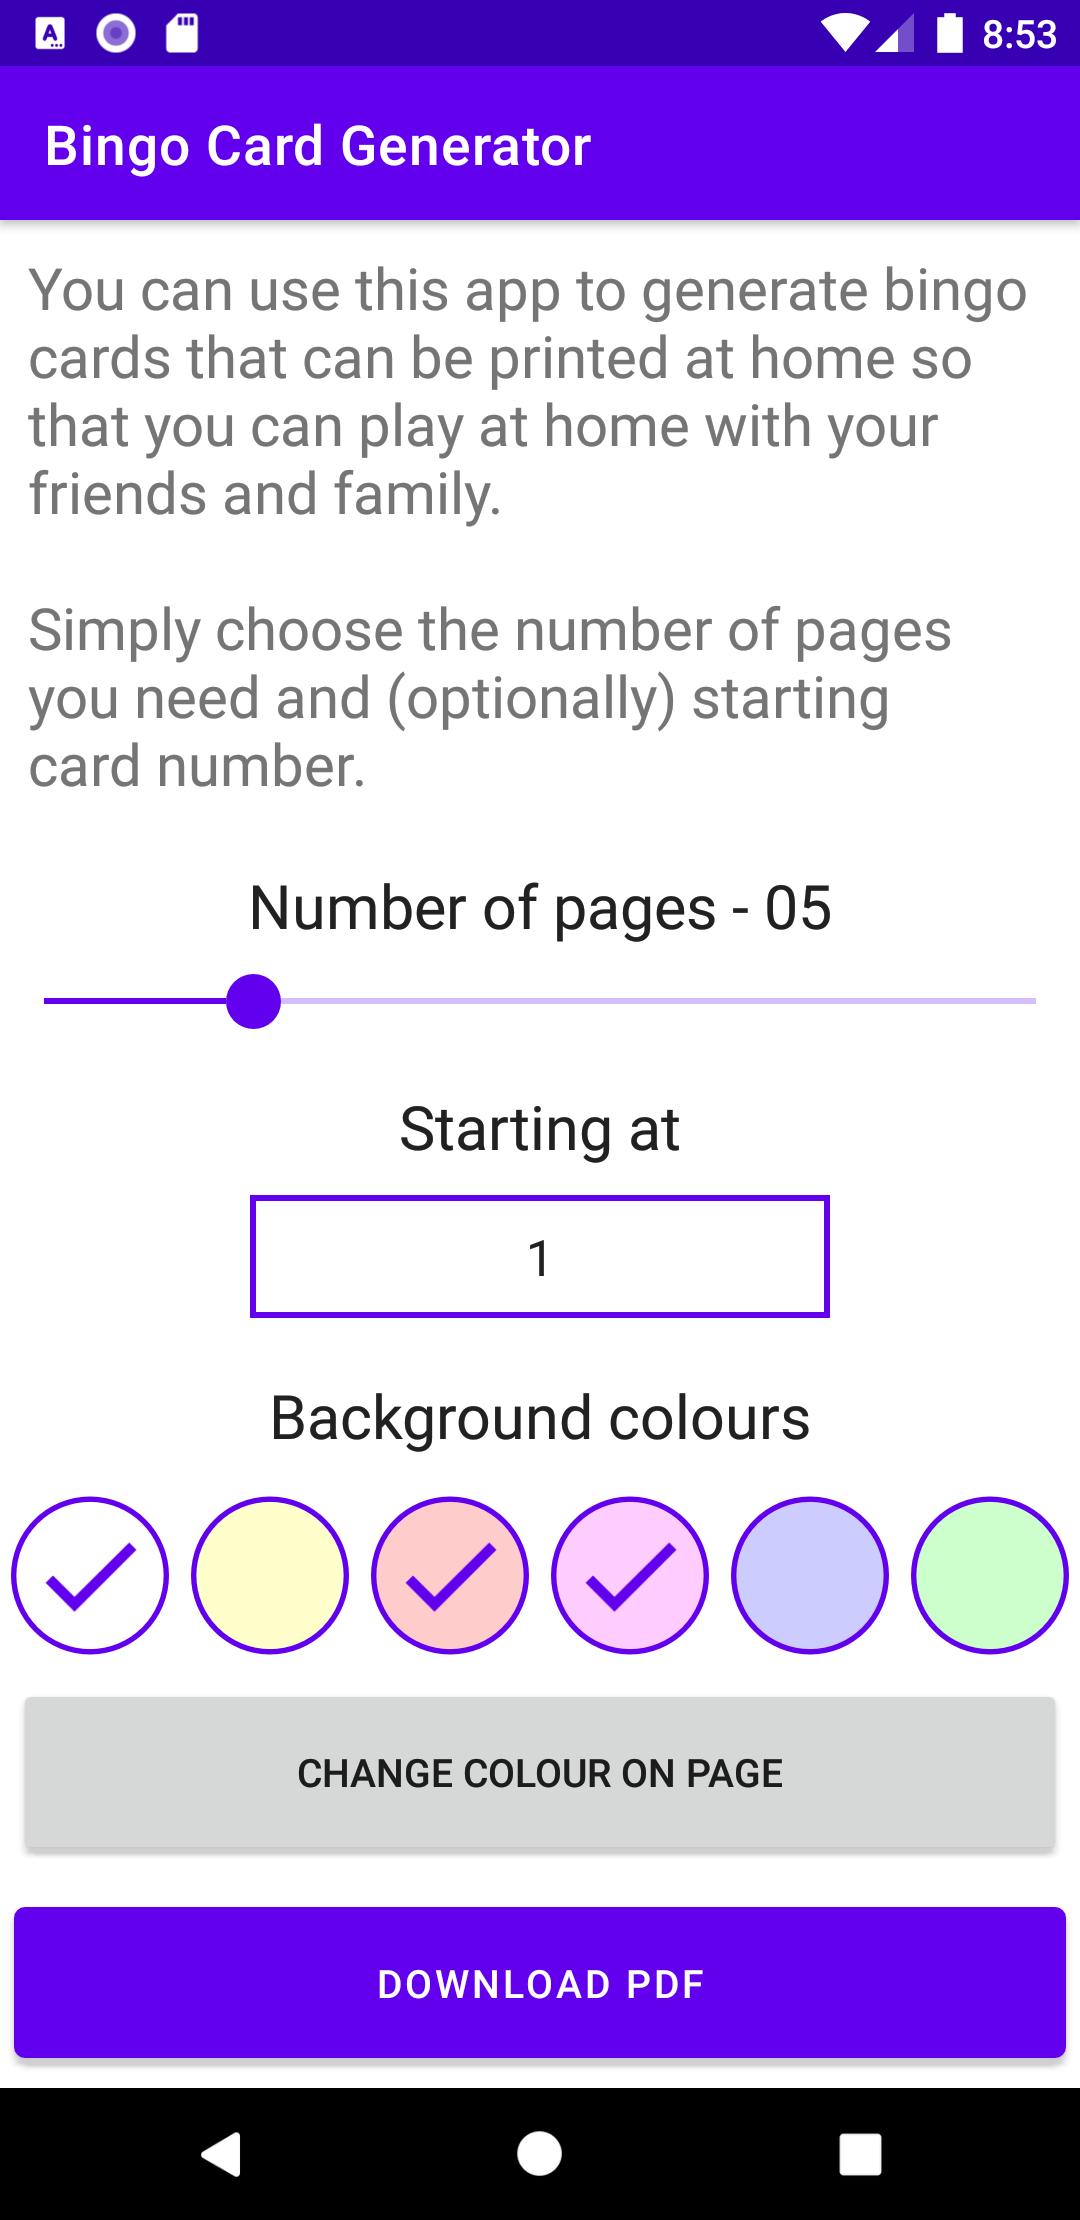 bingo-card-generator-apk-for-android-download